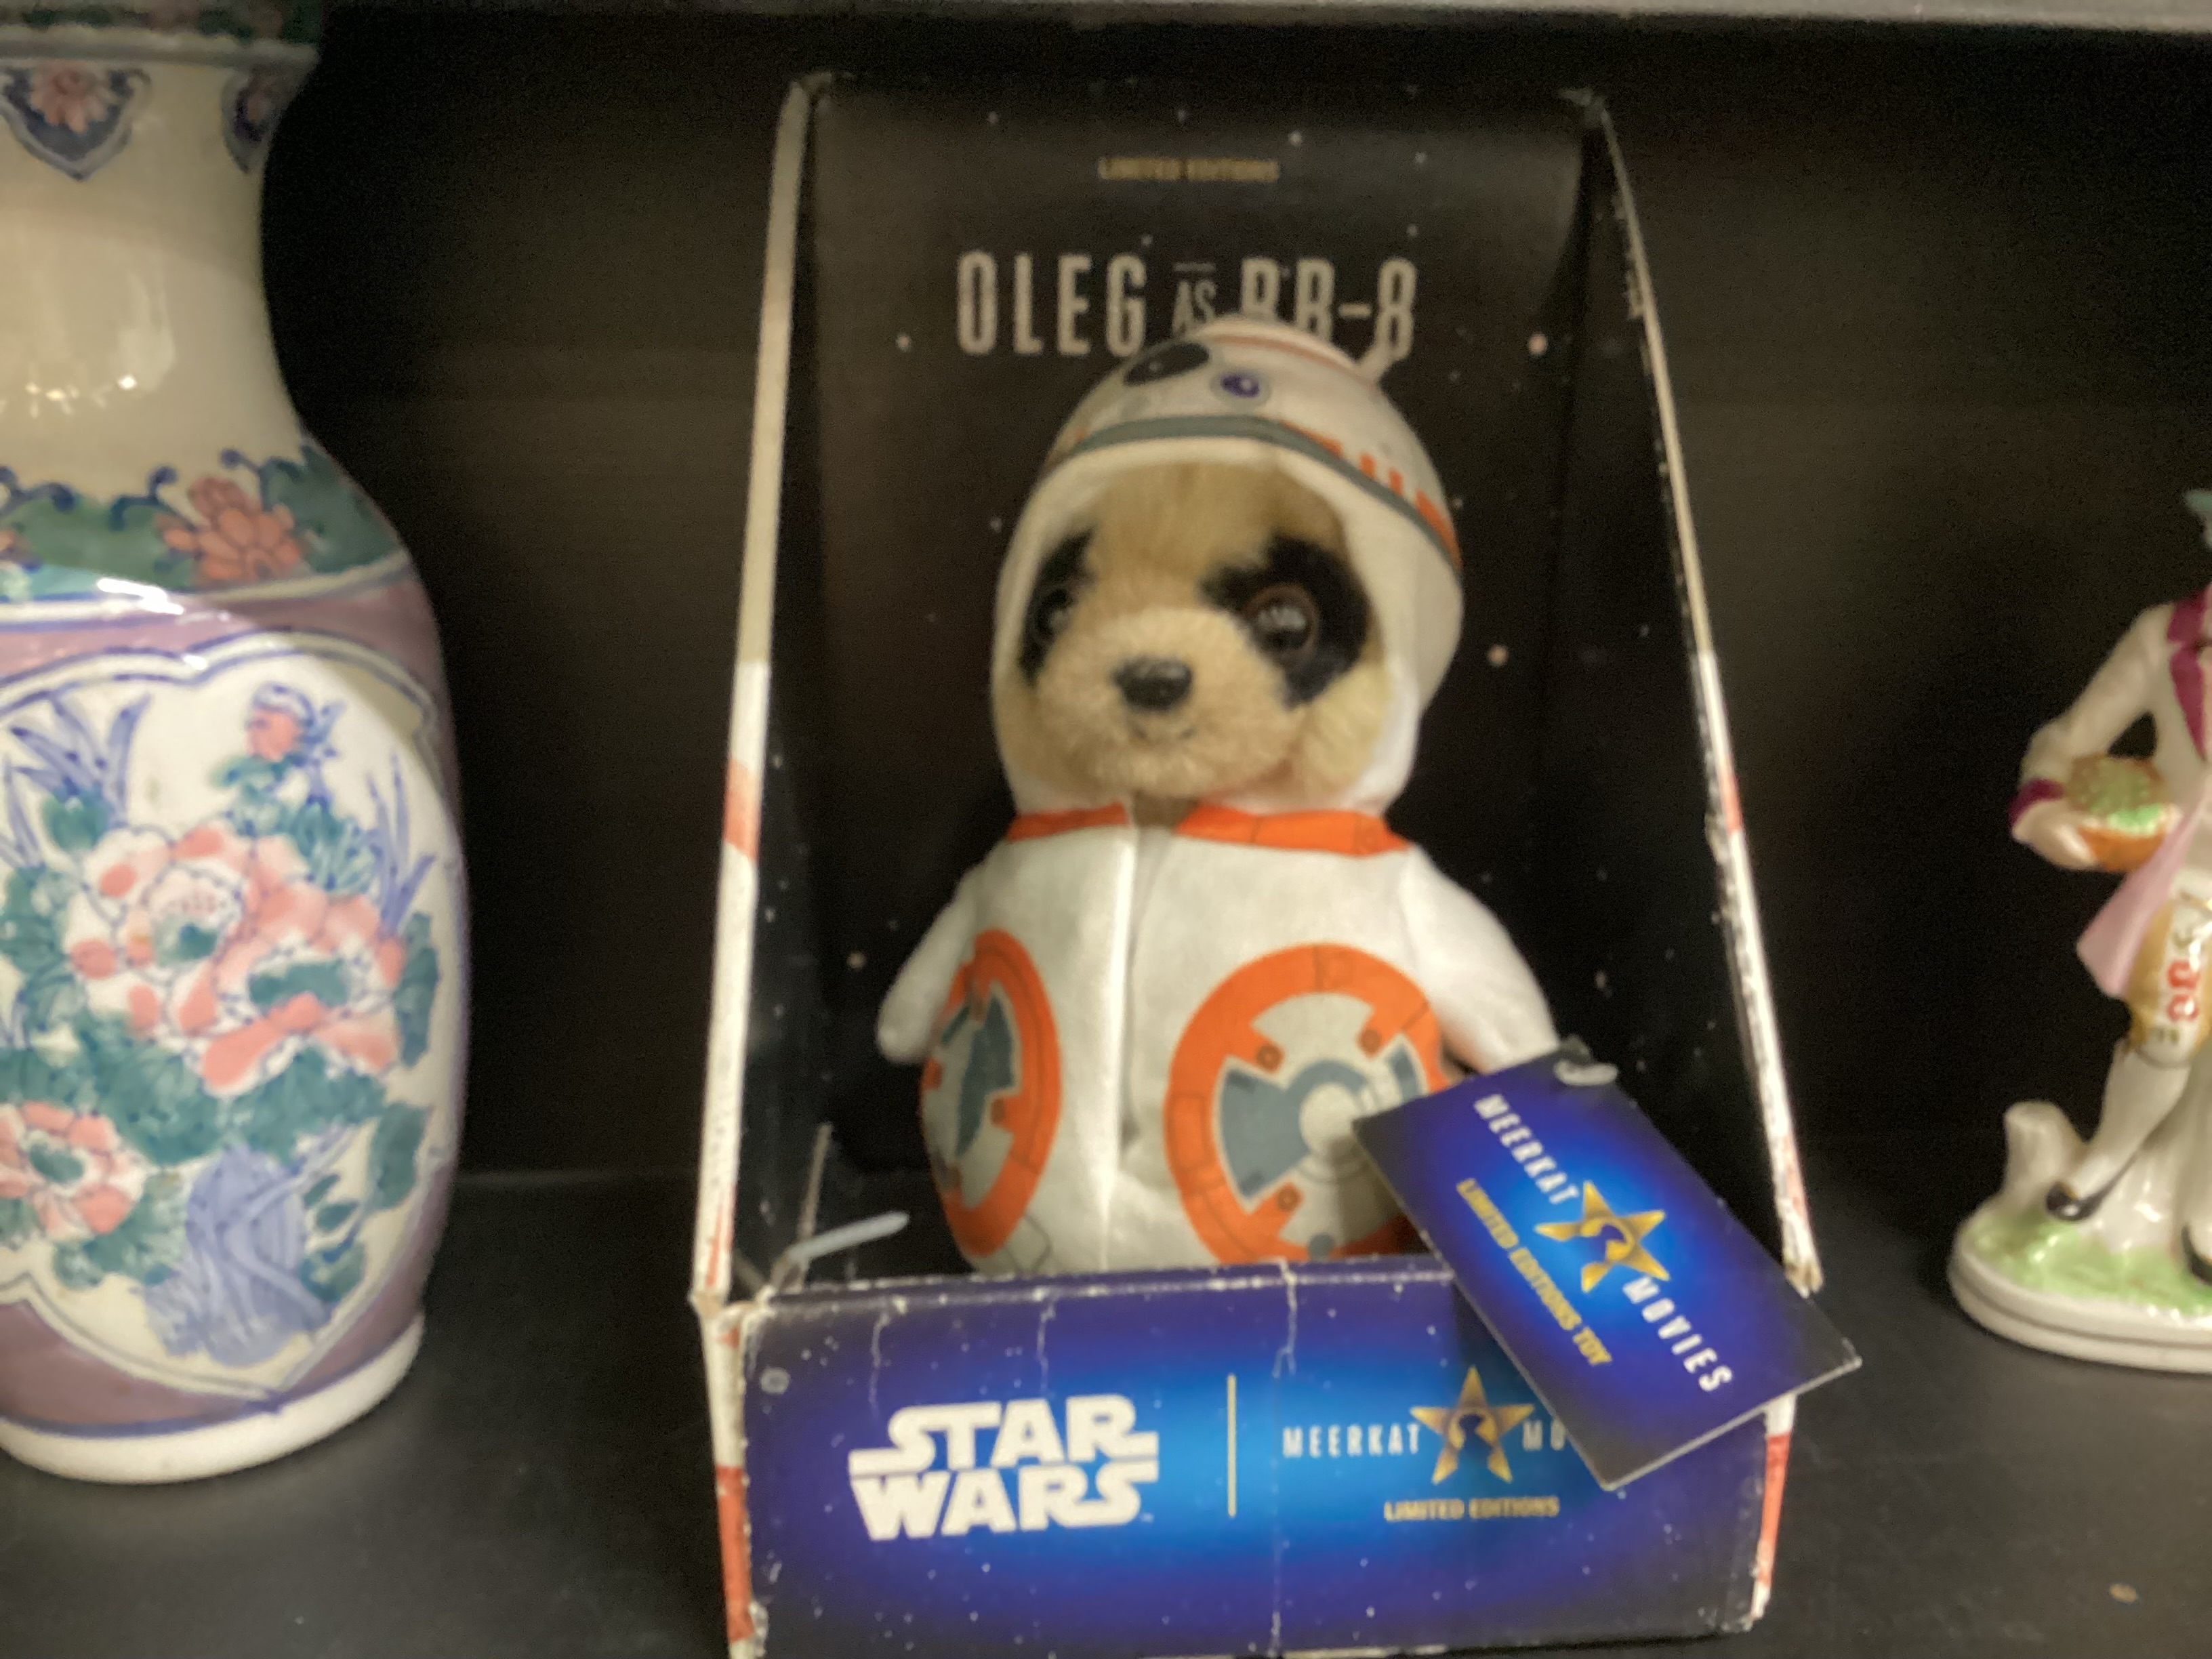 Oleg as BB-8 Plush Toy Limited Edition